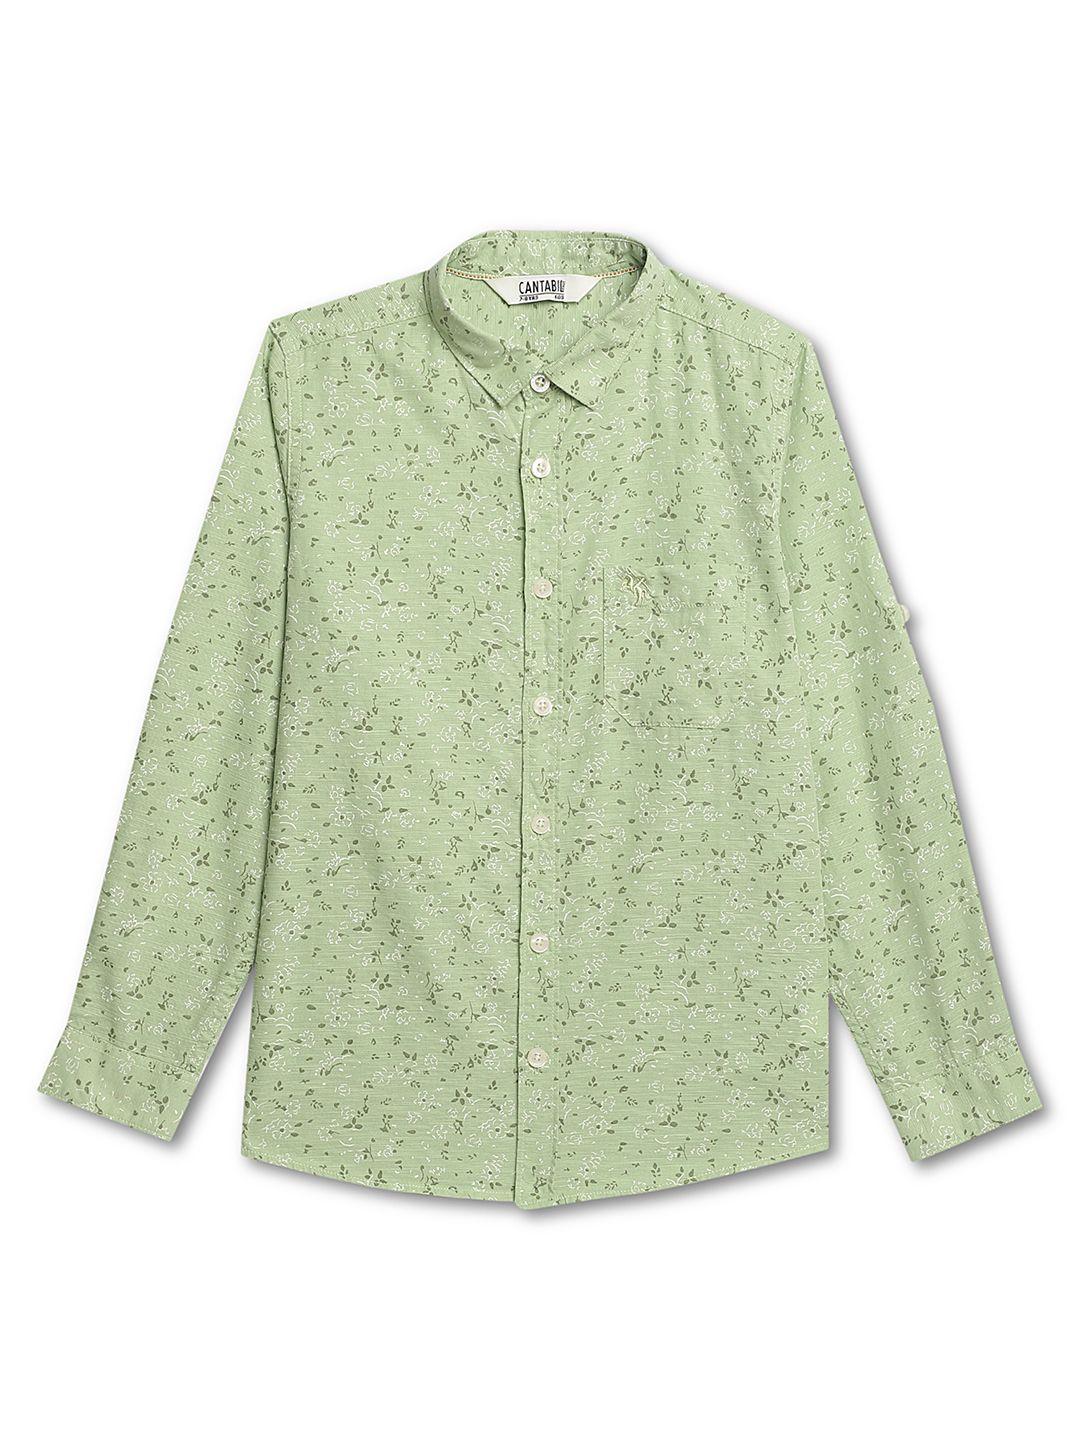 cantabil-boys-green-classic-opaque-printed-casual-shirt